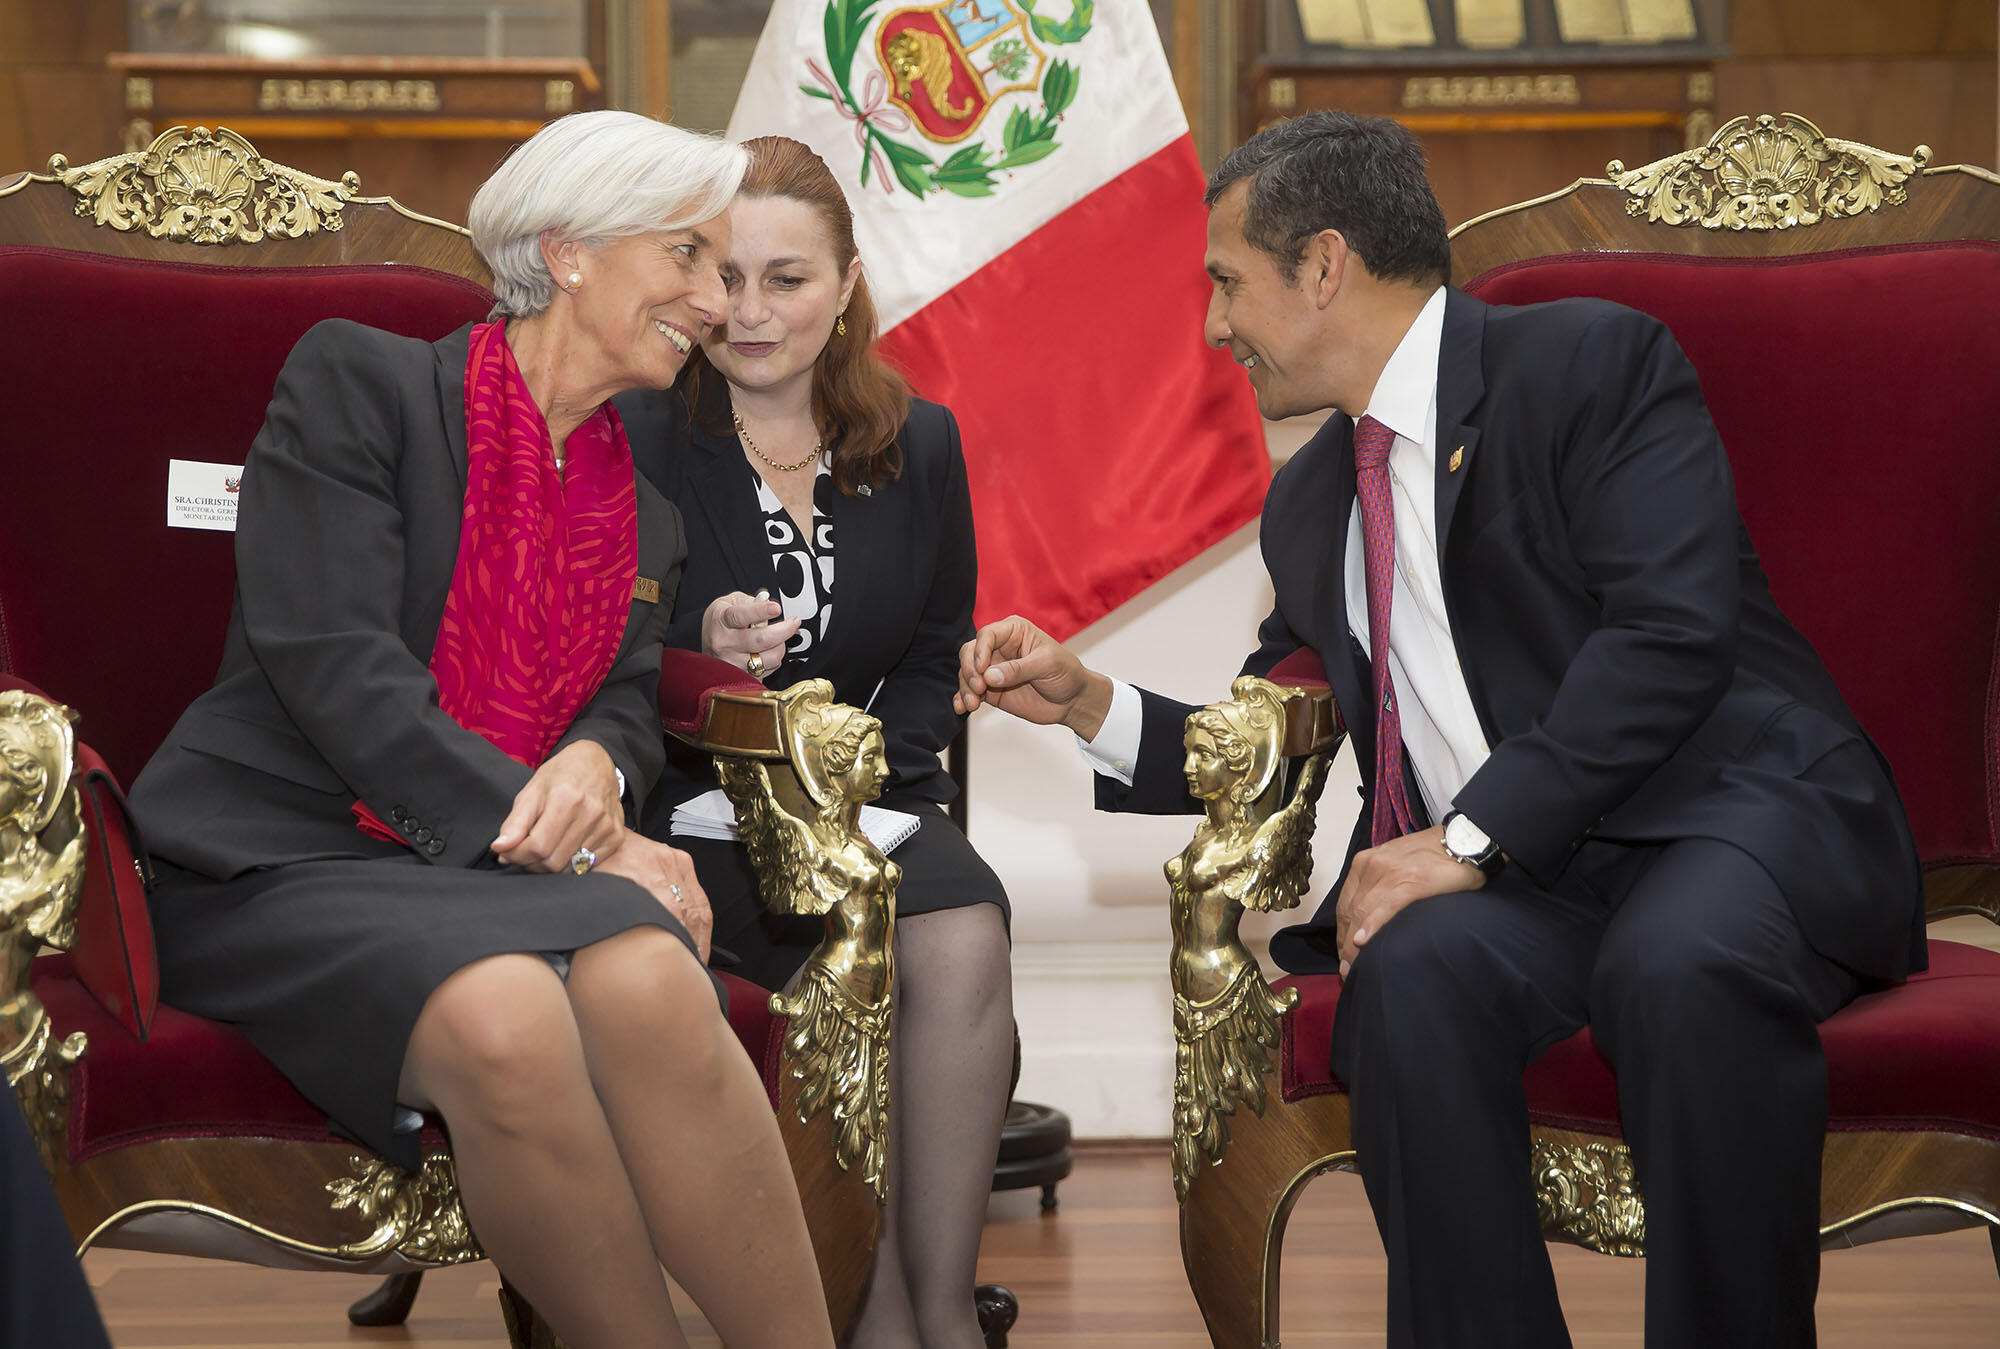 A photo of Peru’s president Ollanta Humala meeting with the International Monetary Fund’s Christine Lagarde in 2014. (Photo by Stephen Jaffe/IMF Staff.)